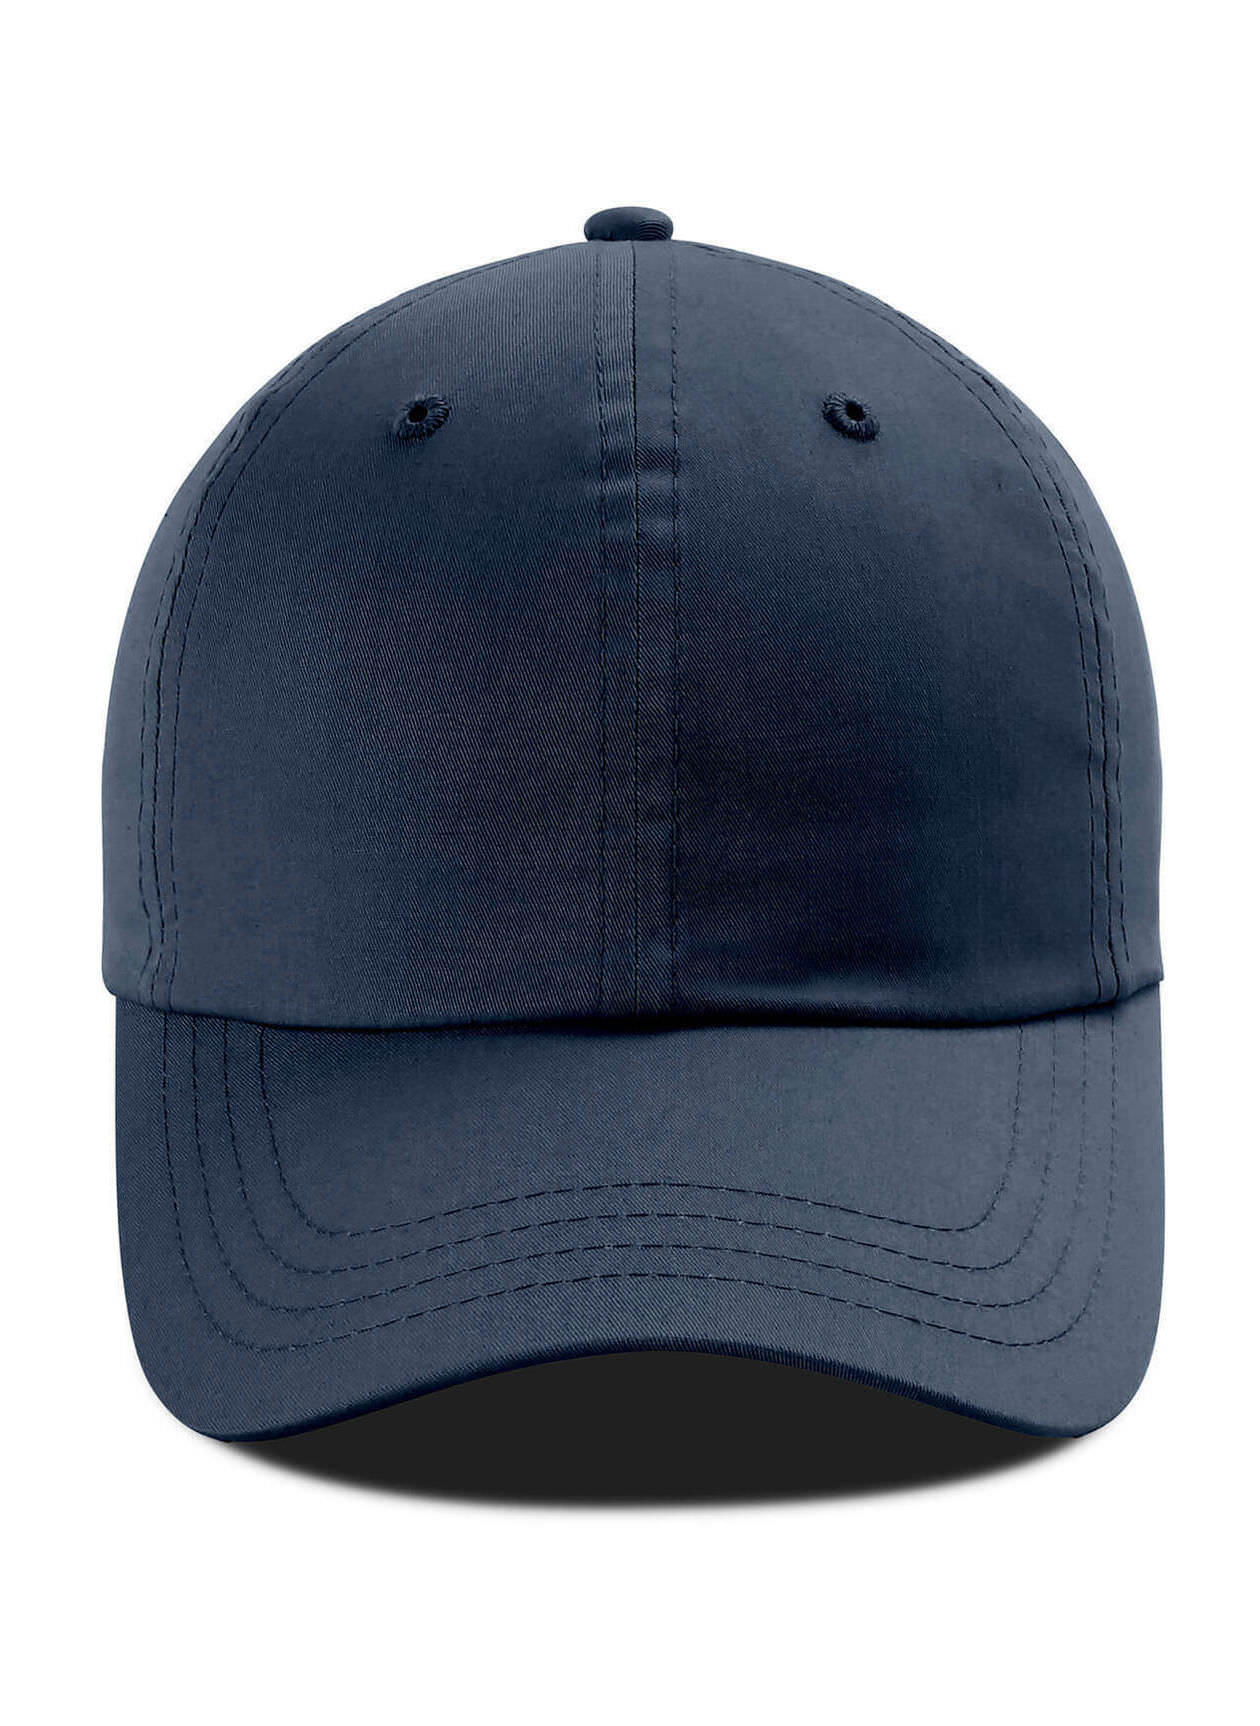 Imperial Navy The Zero Lightweight Cotton Hat